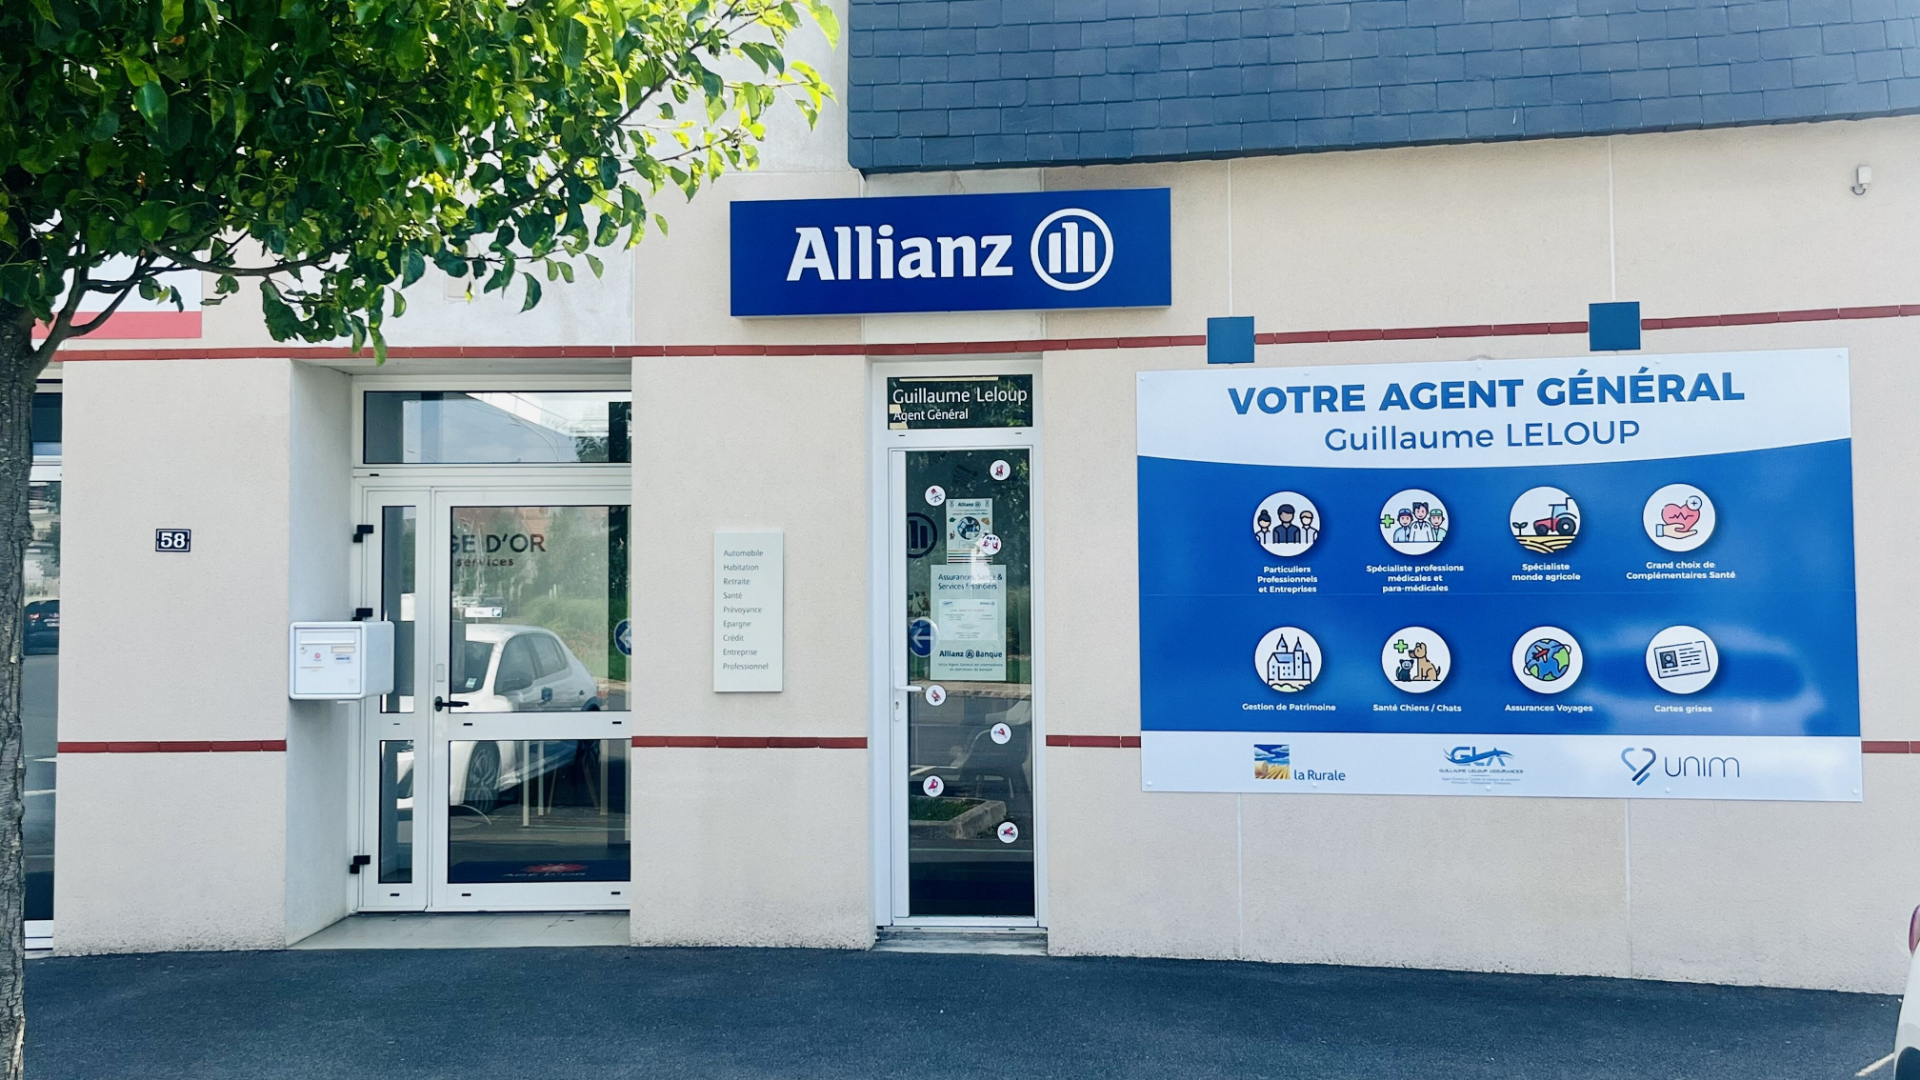 Allianz CHATELLERAULT - Guillaume LELOUP 